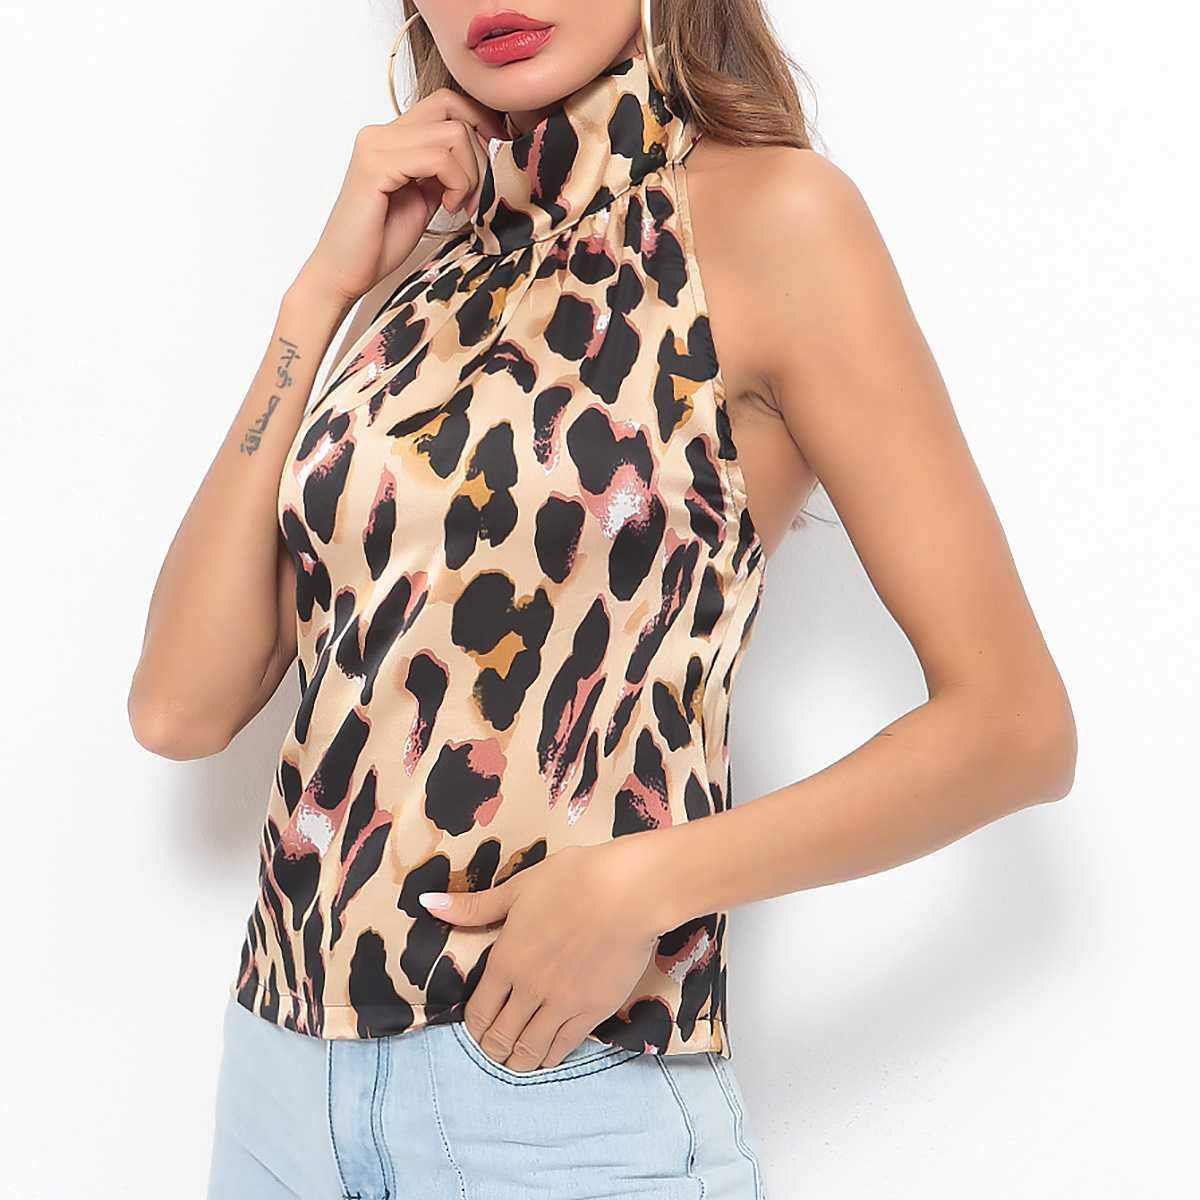 Leopard Halter Neck Tank Top Open Back Sleeveless Shirt on sale - SOUISEE